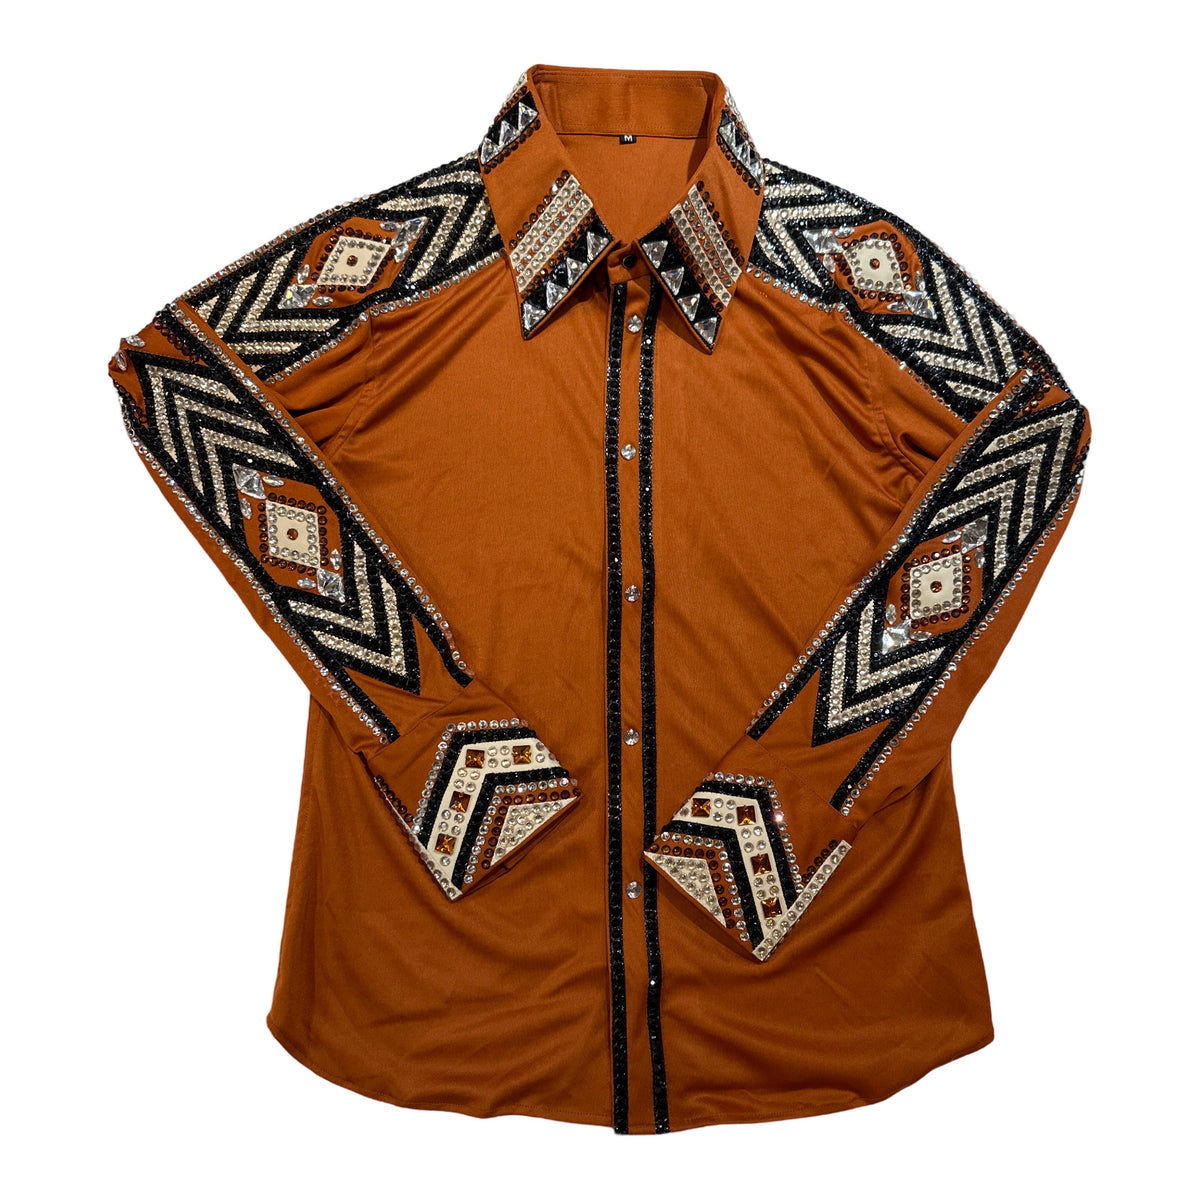 Kashani Orange Squash Hyper Crystal Button-Up Zip Shirt - Dudes Boutique